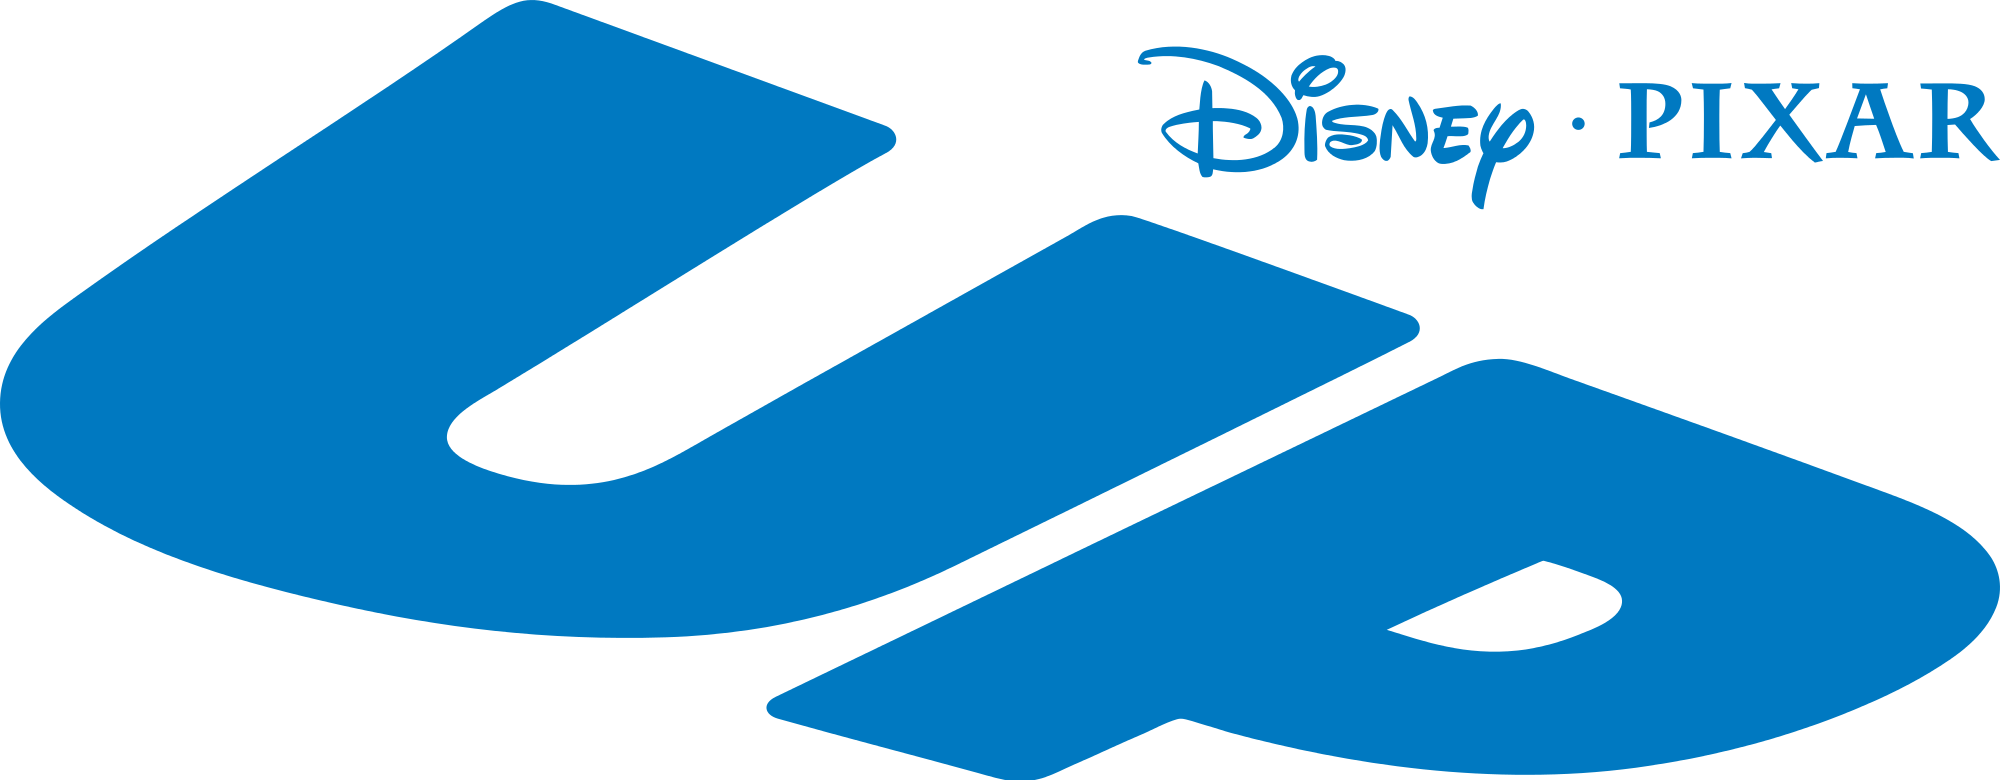 Pixar Movie Logo - Up (2009 film) logo.svg